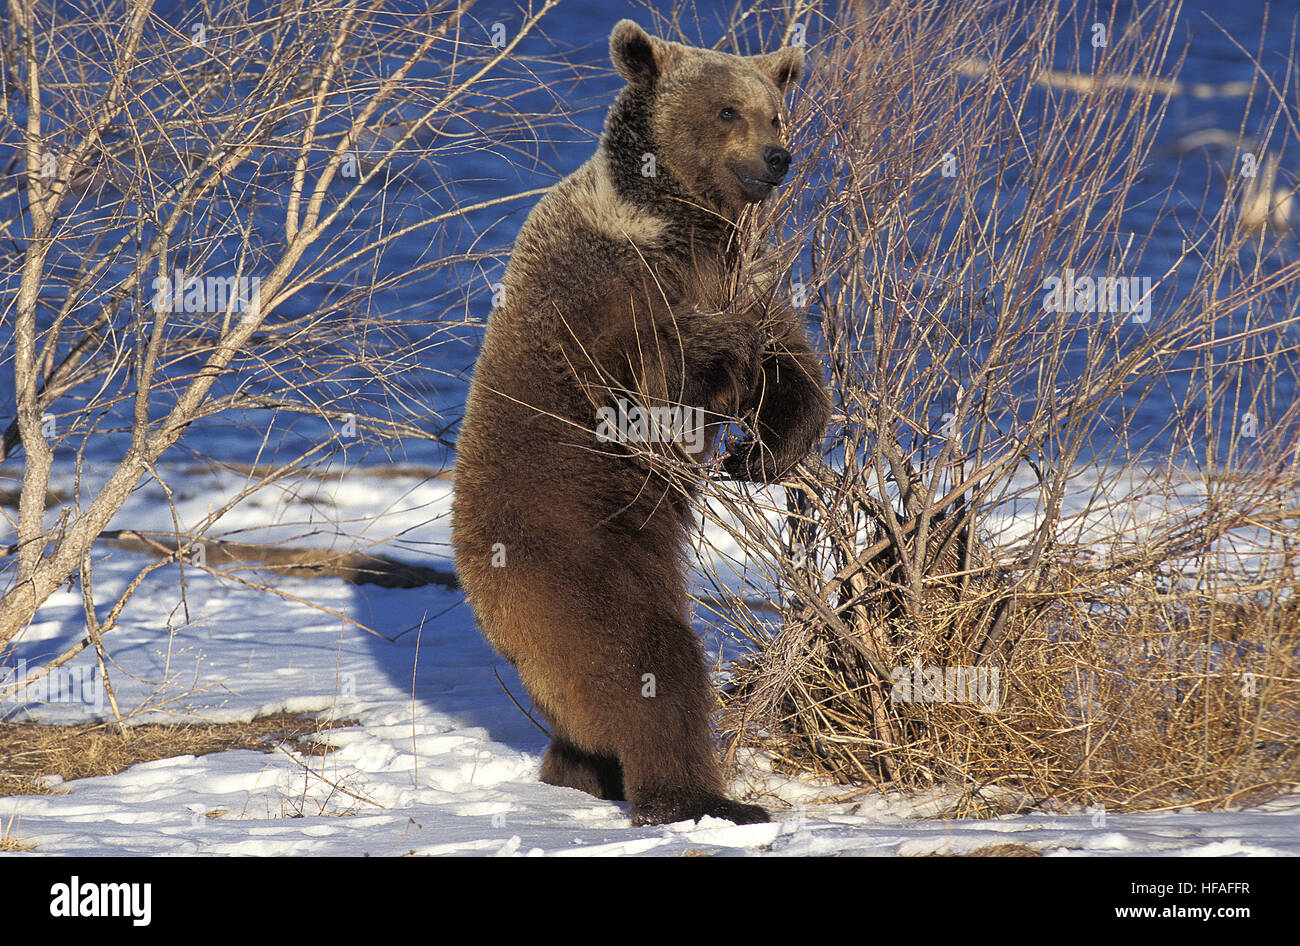 Grizzly Bear, ursus arctos horribilis, standing on Hind Legs, Alaska Stock Photo